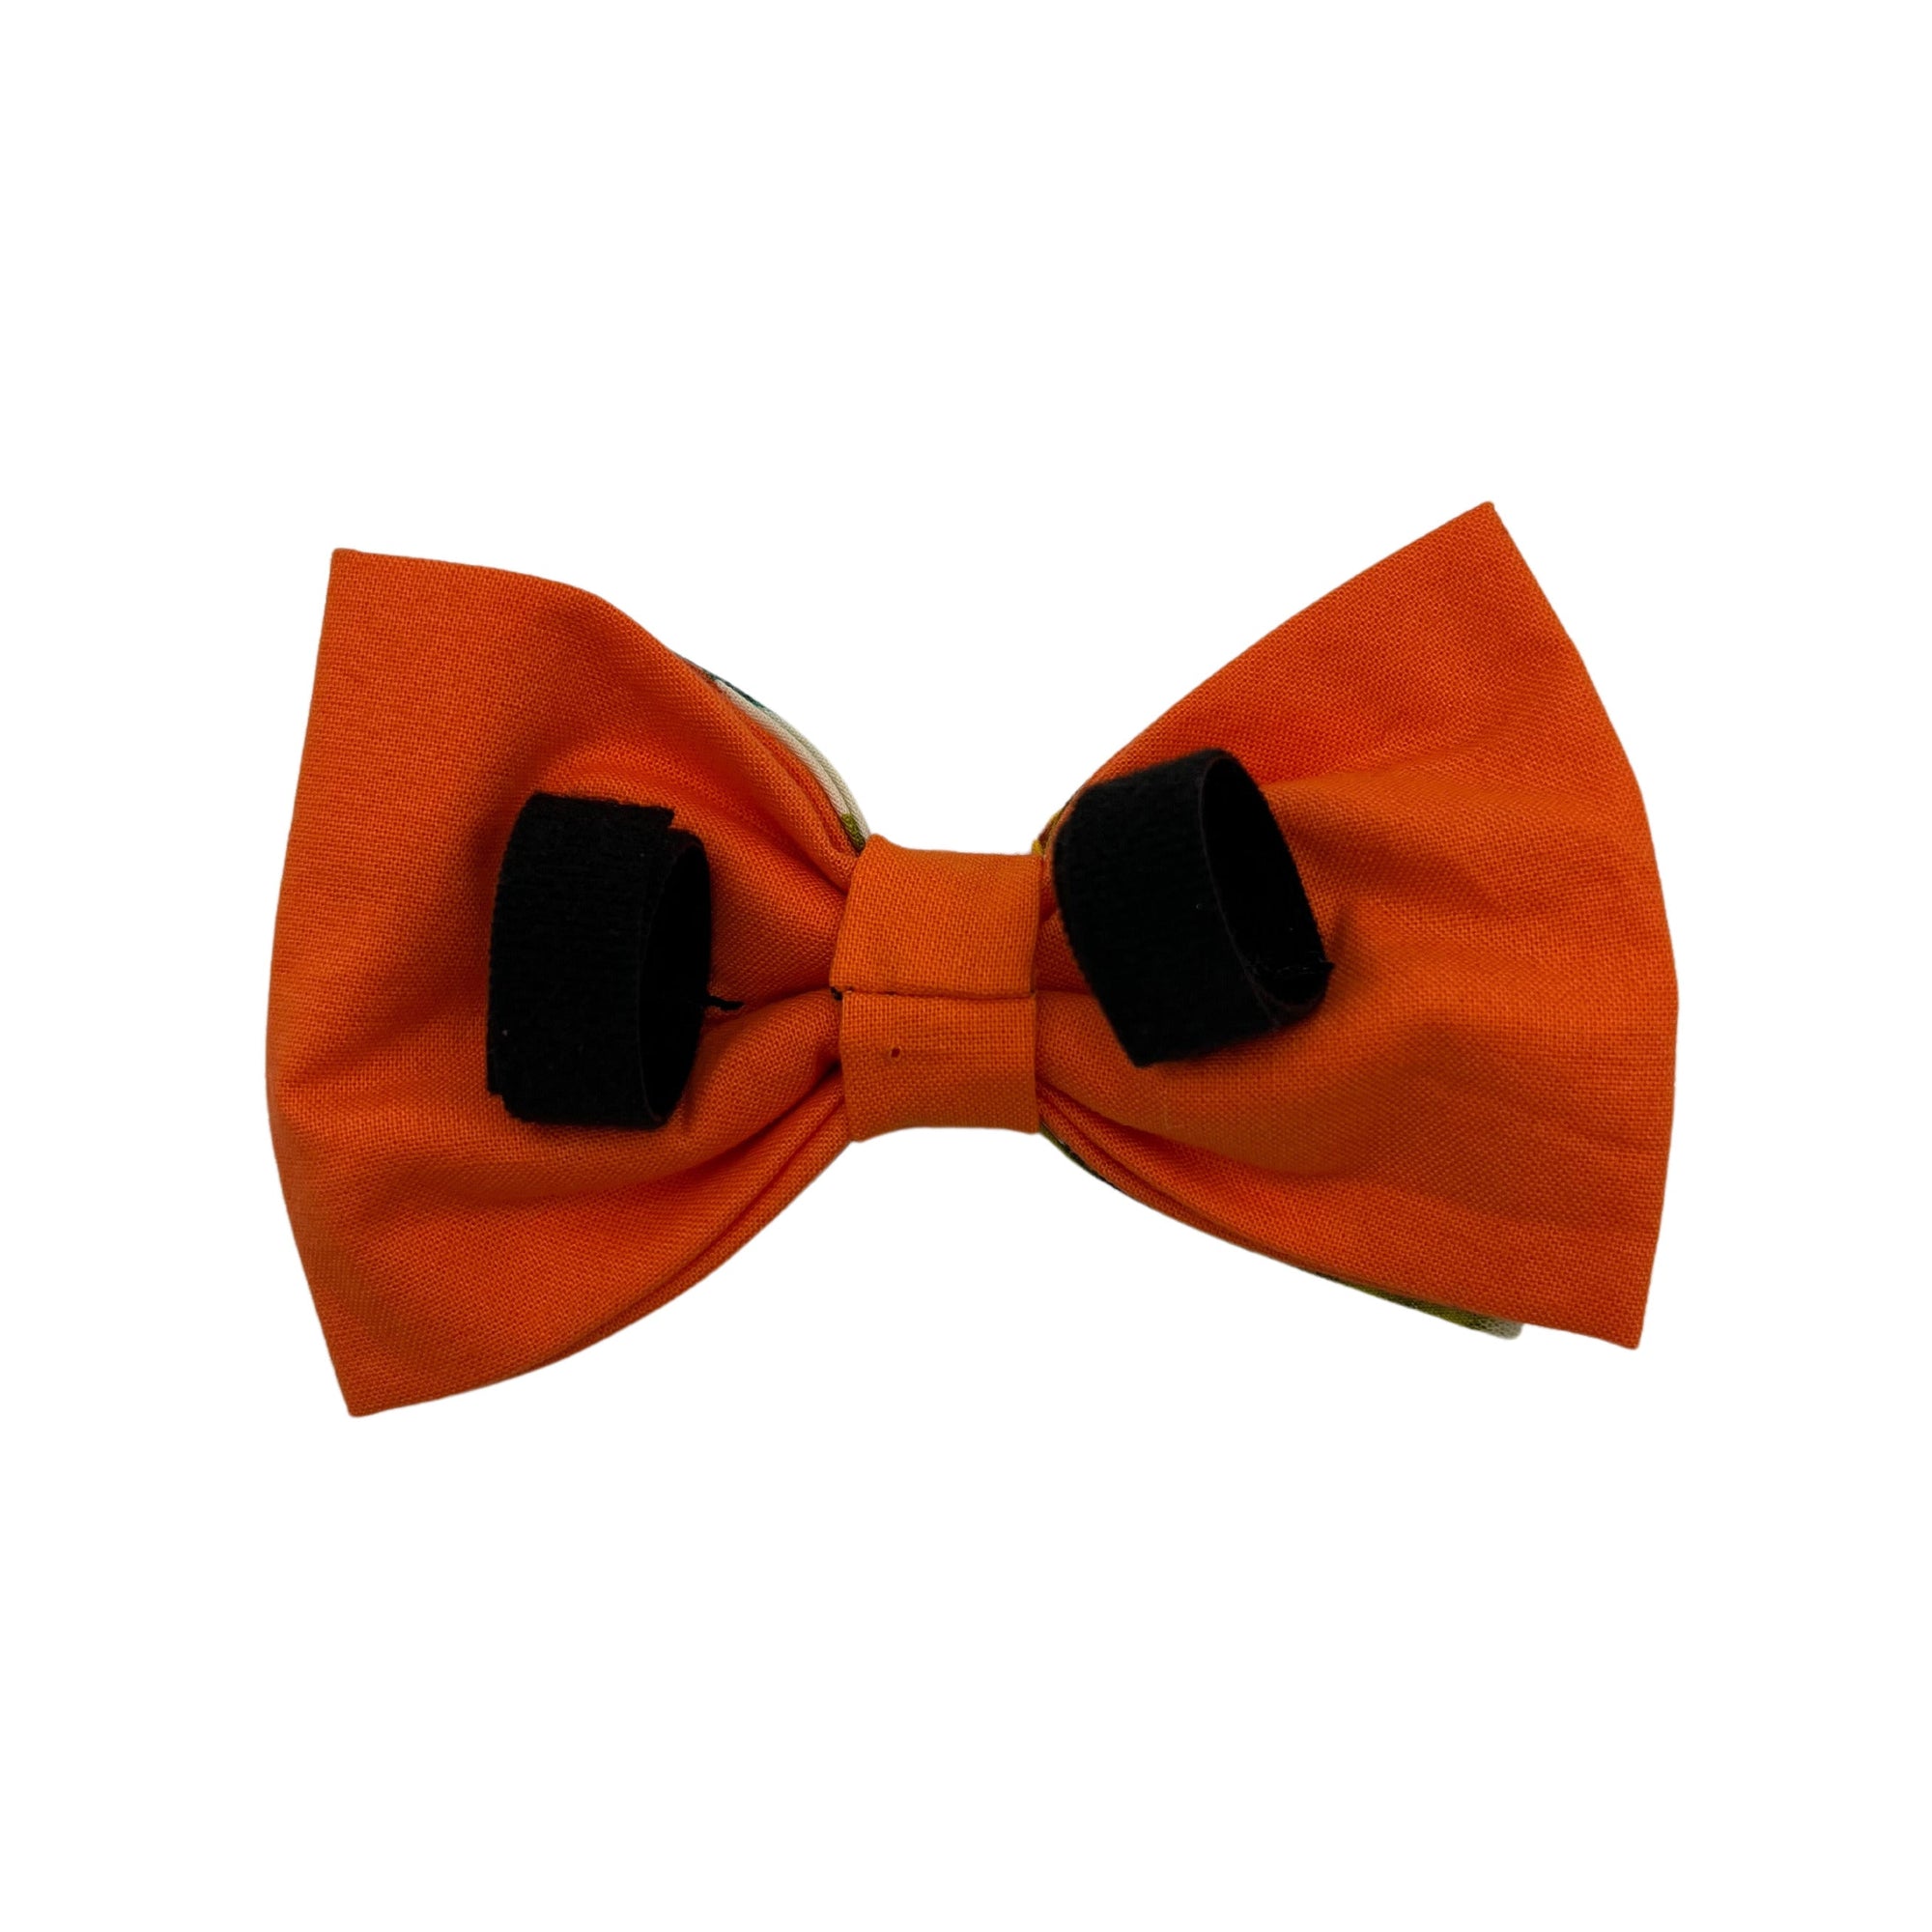 Medium Double Bow Tie - Orange Hibiscus